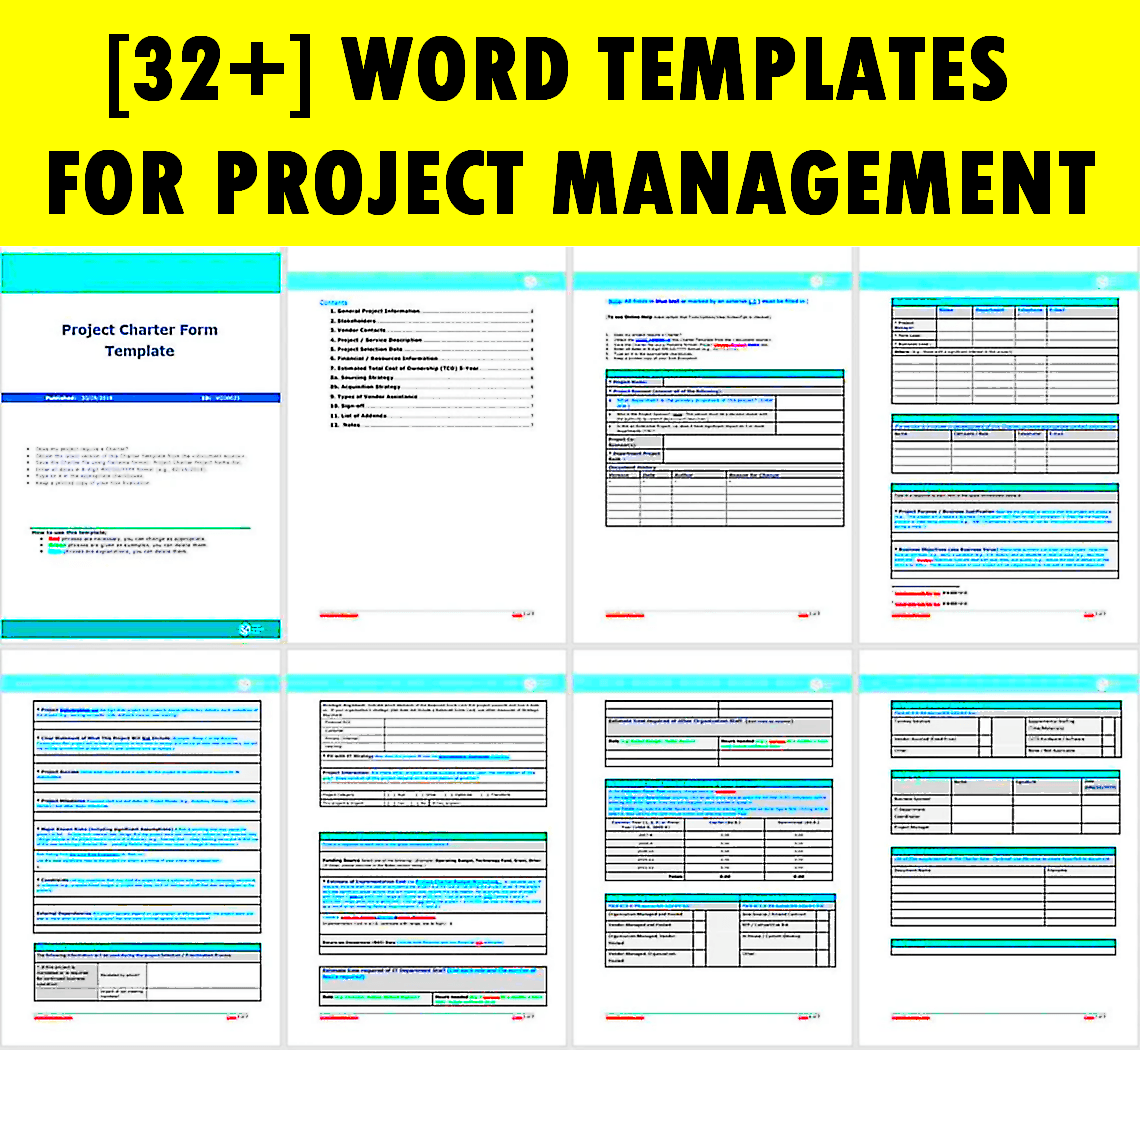 SLIDEINO™ - 34 Word Project Management Templates - SlideIno